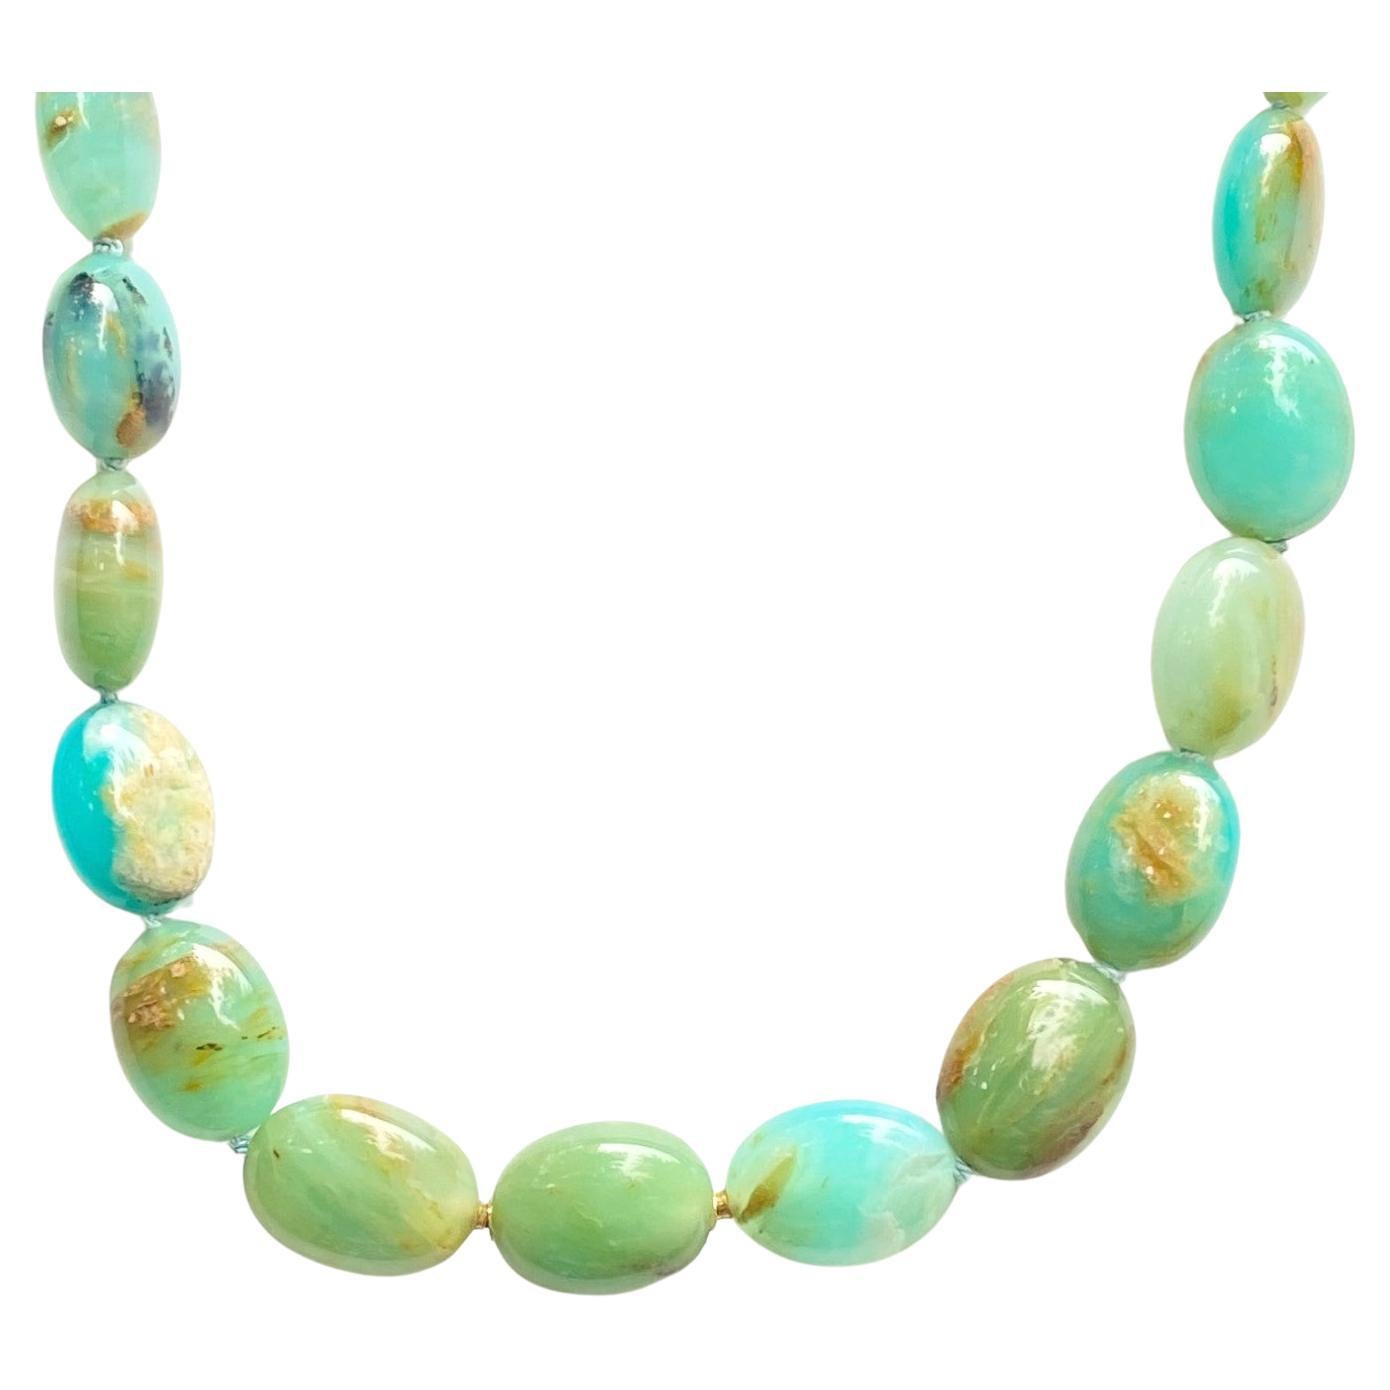 Modullyn Peruvian Opal Necklace